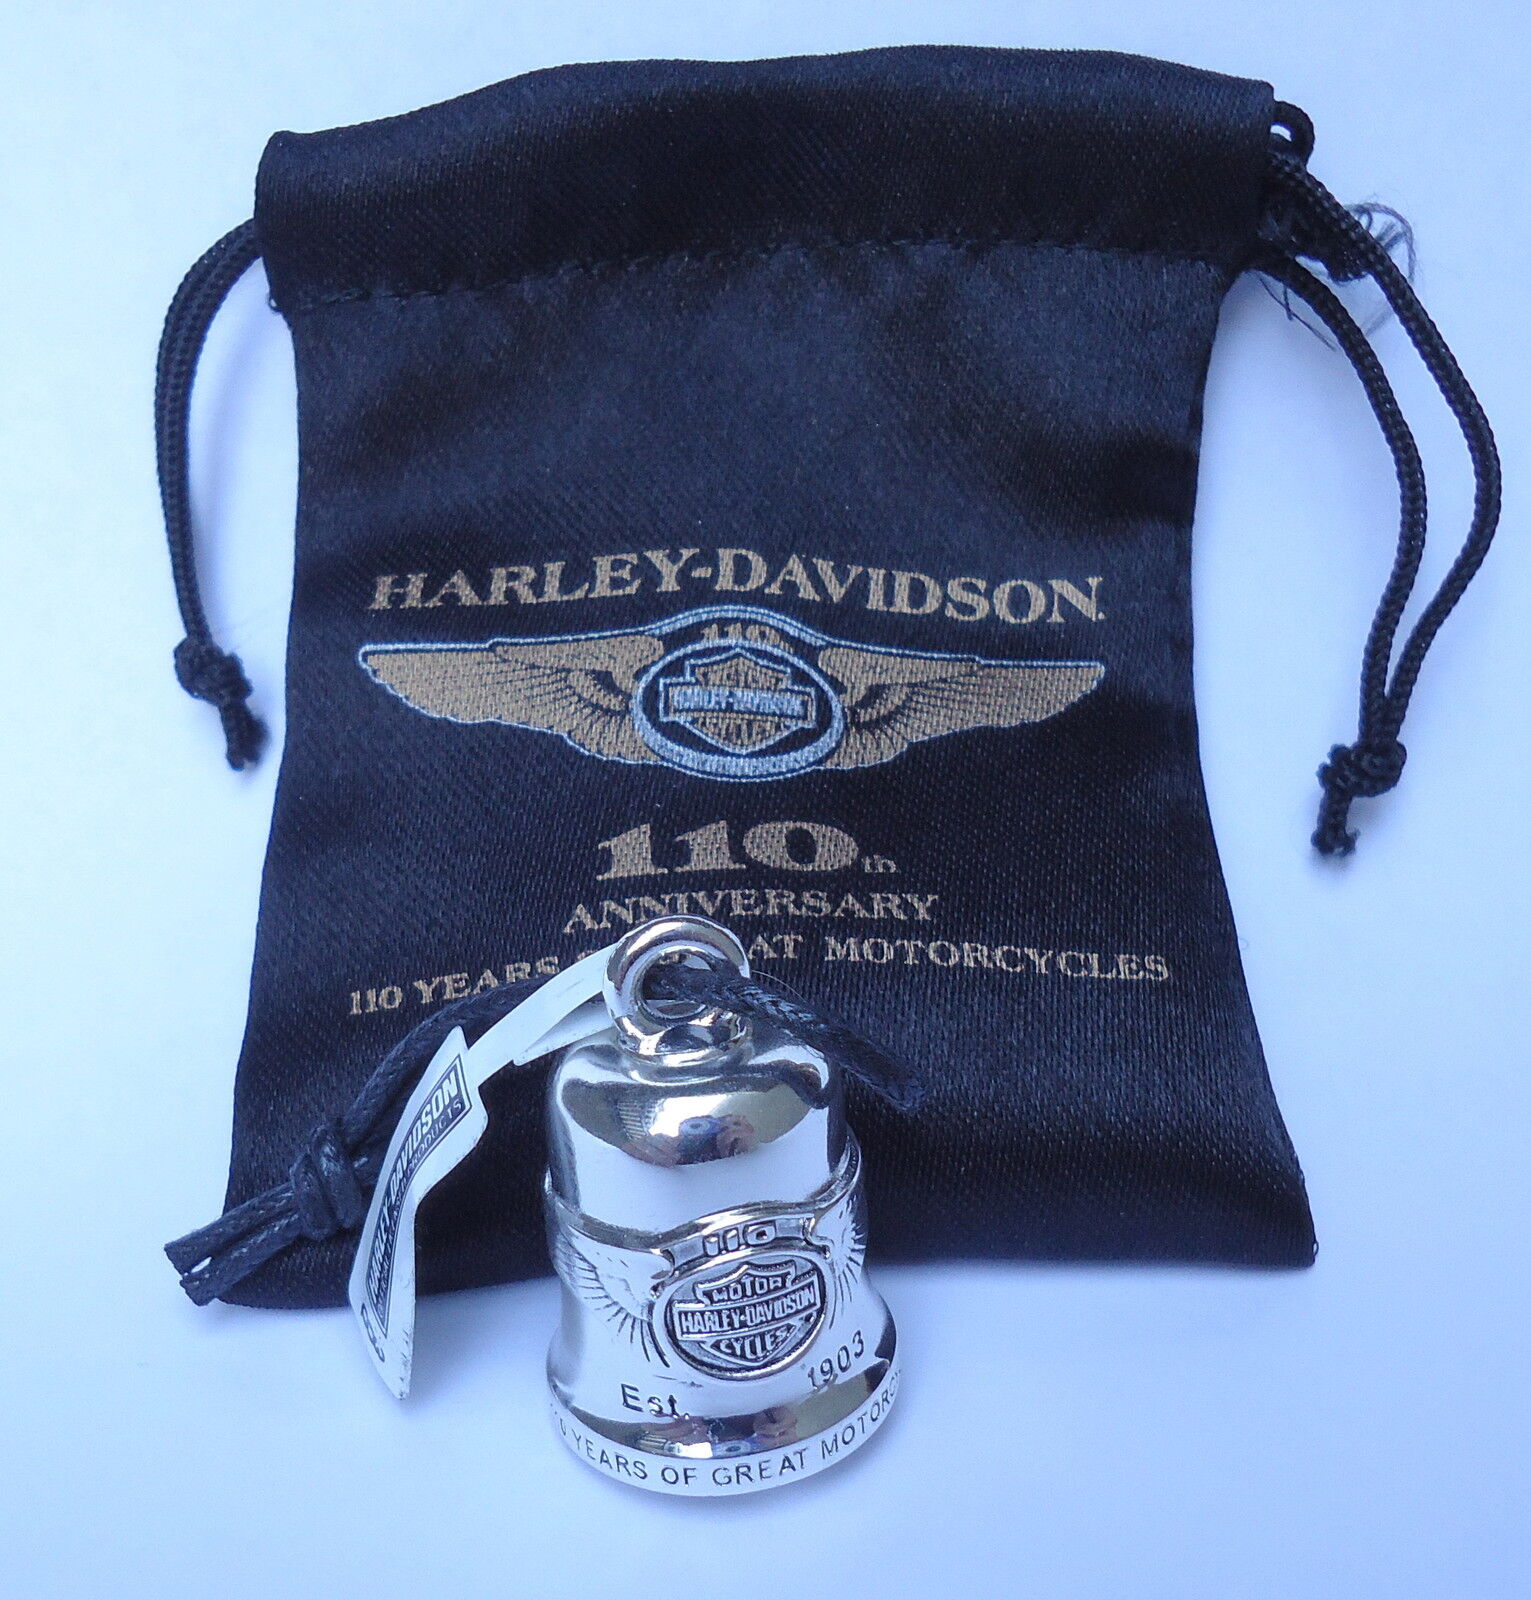 HARLEY DAVIDSON 110TH ANNIVERSARY ANNIVERSARY RIDE BELL 